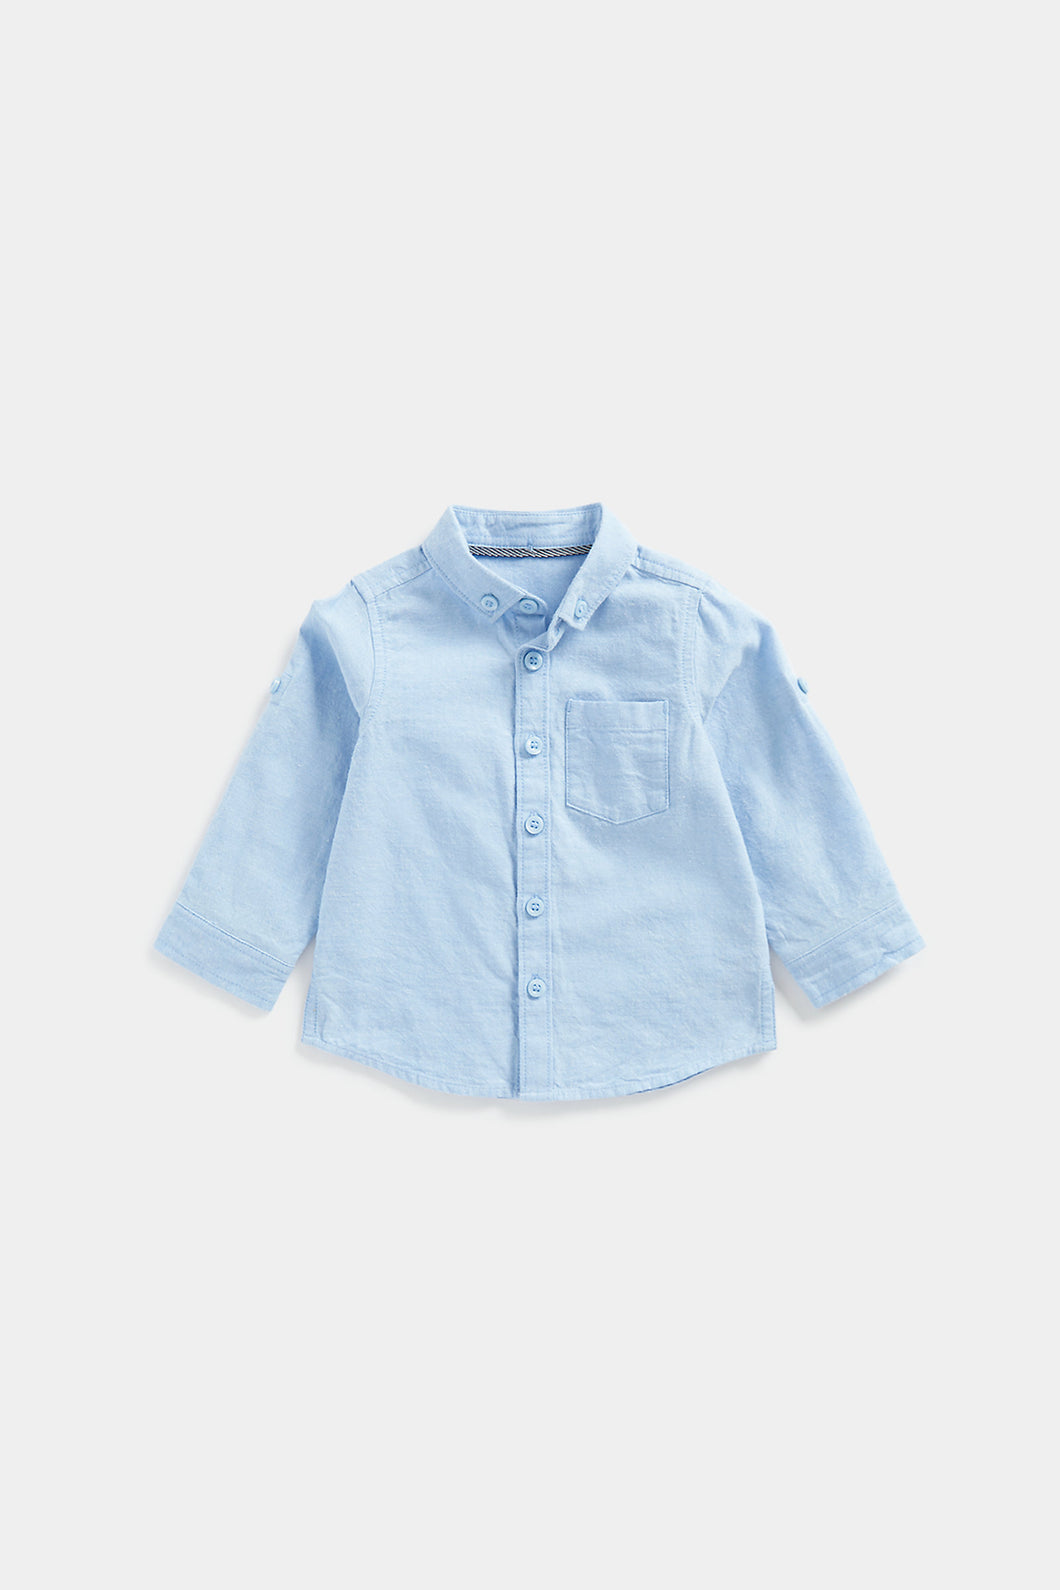 Mothercare Chambray Cotton Shirt